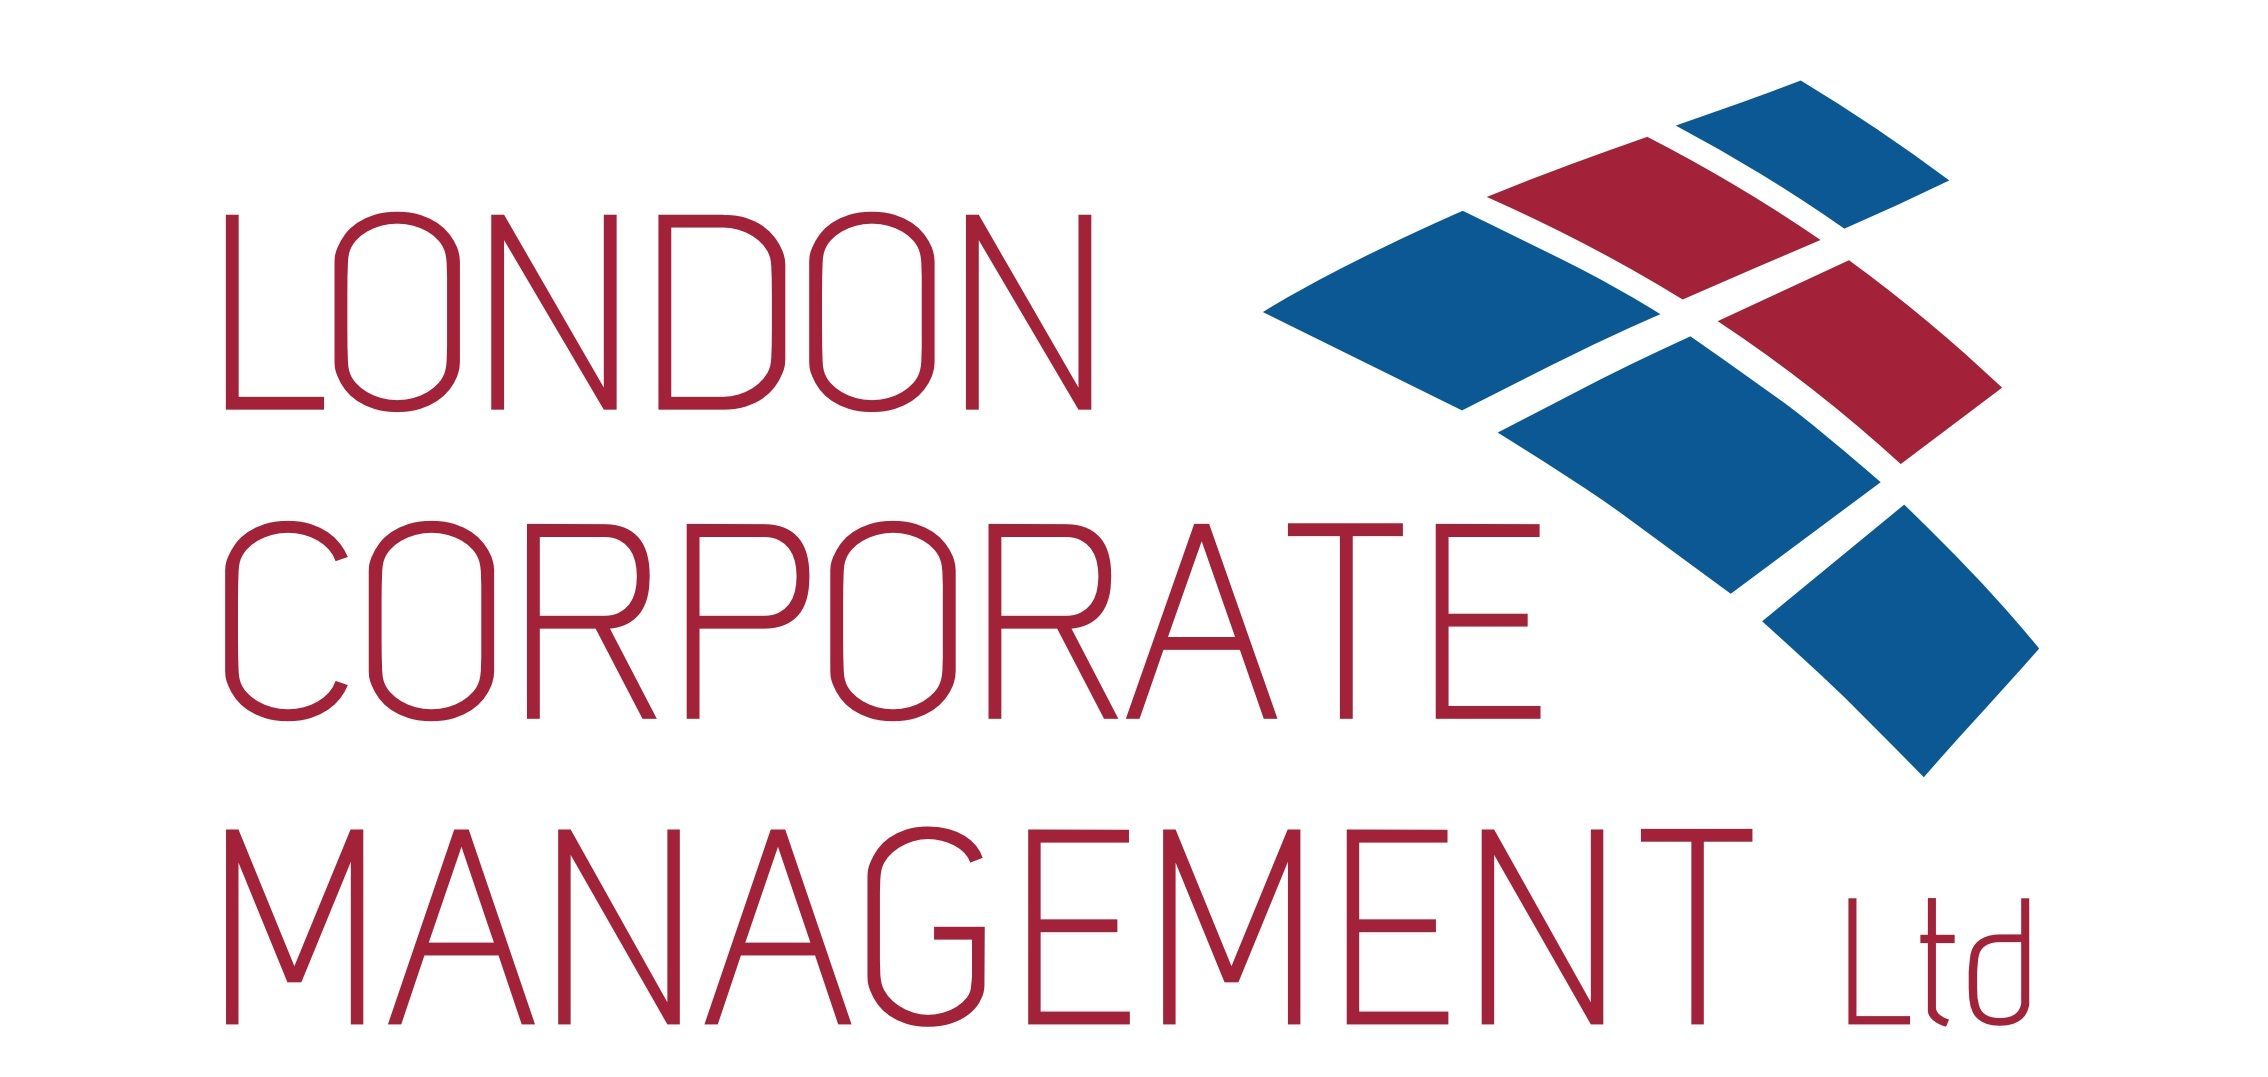 London Corporate Management